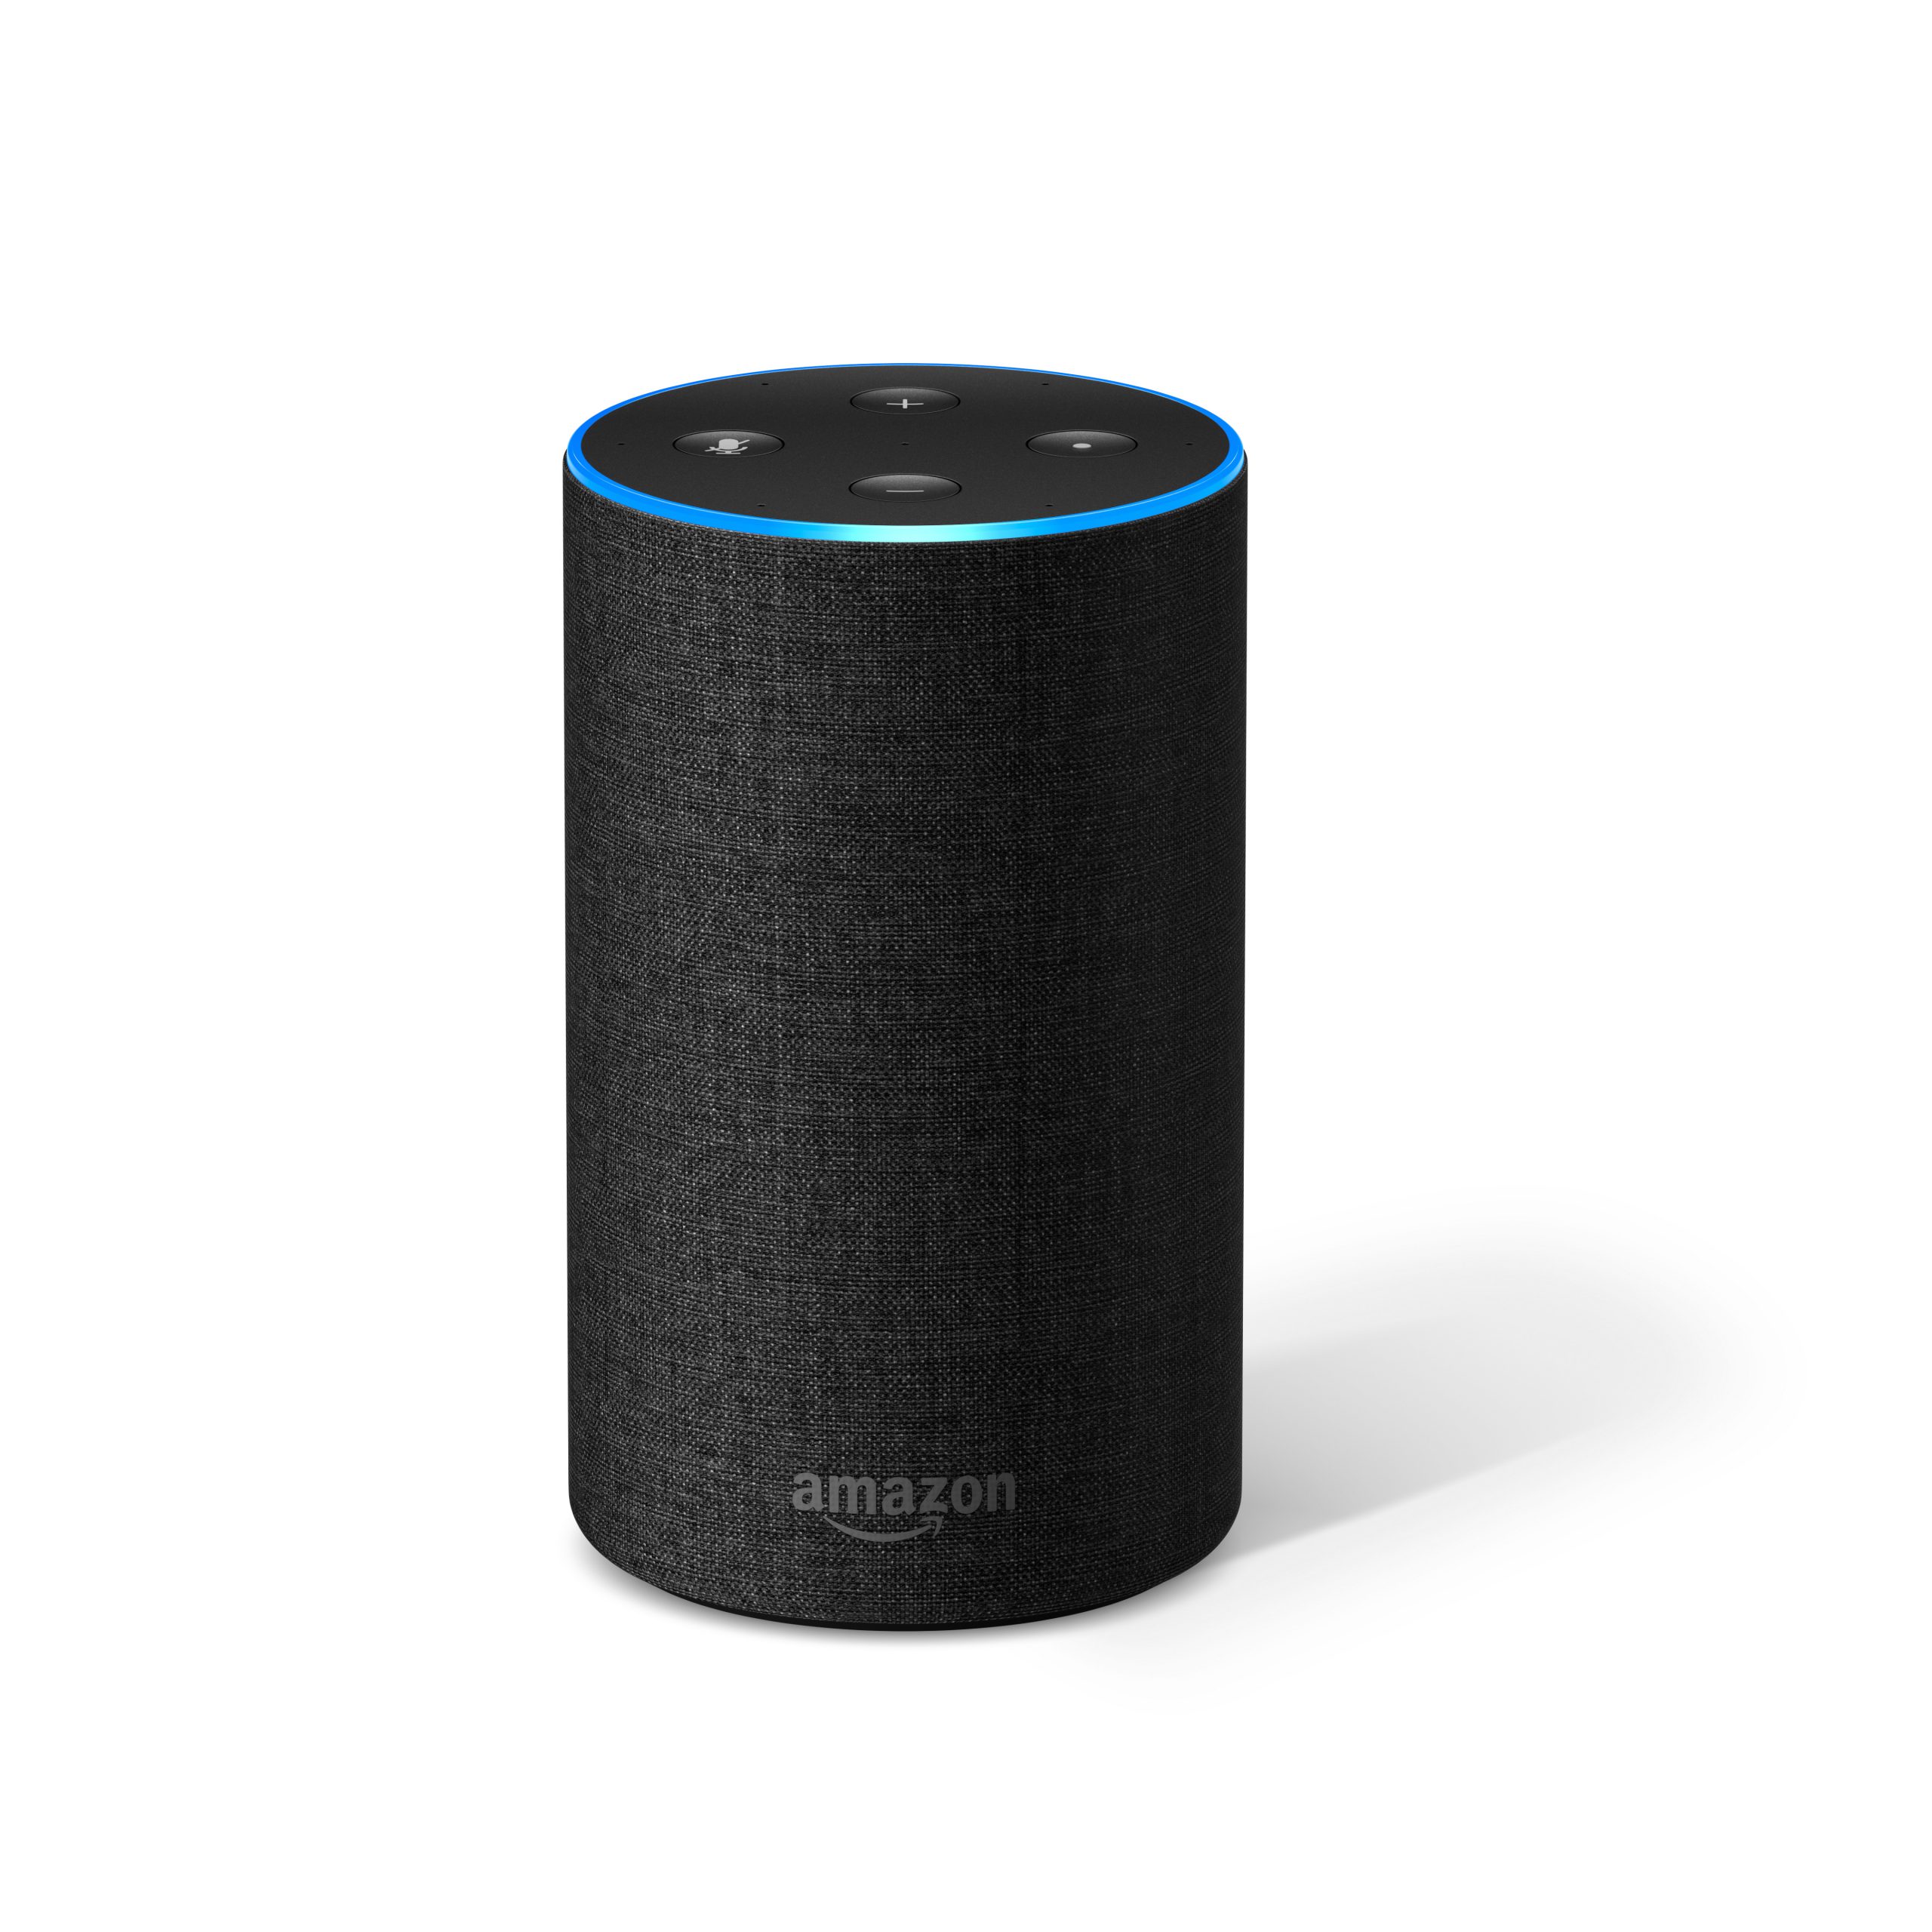 lugtfri Strøm indlysende TEST: Amazon Echo (2nd Generation) – Klar tale